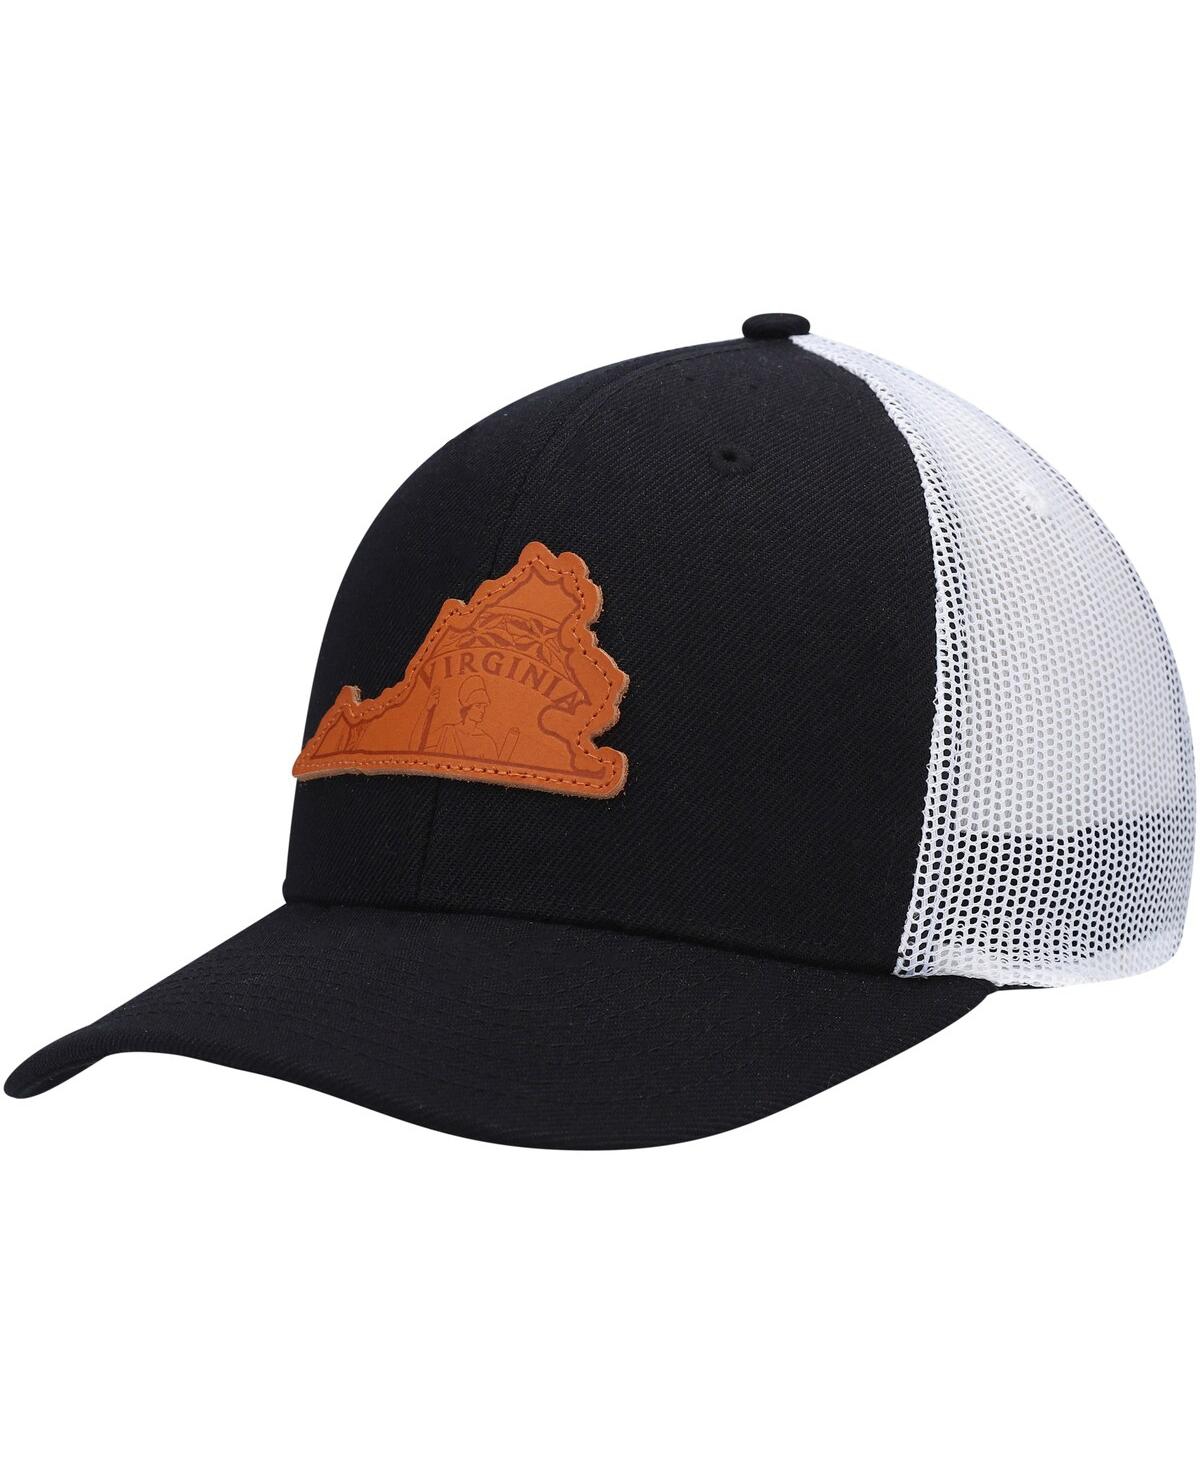 Men's Local Crowns Black Virginia Leather State Applique Trucker Snapback Hat - Black